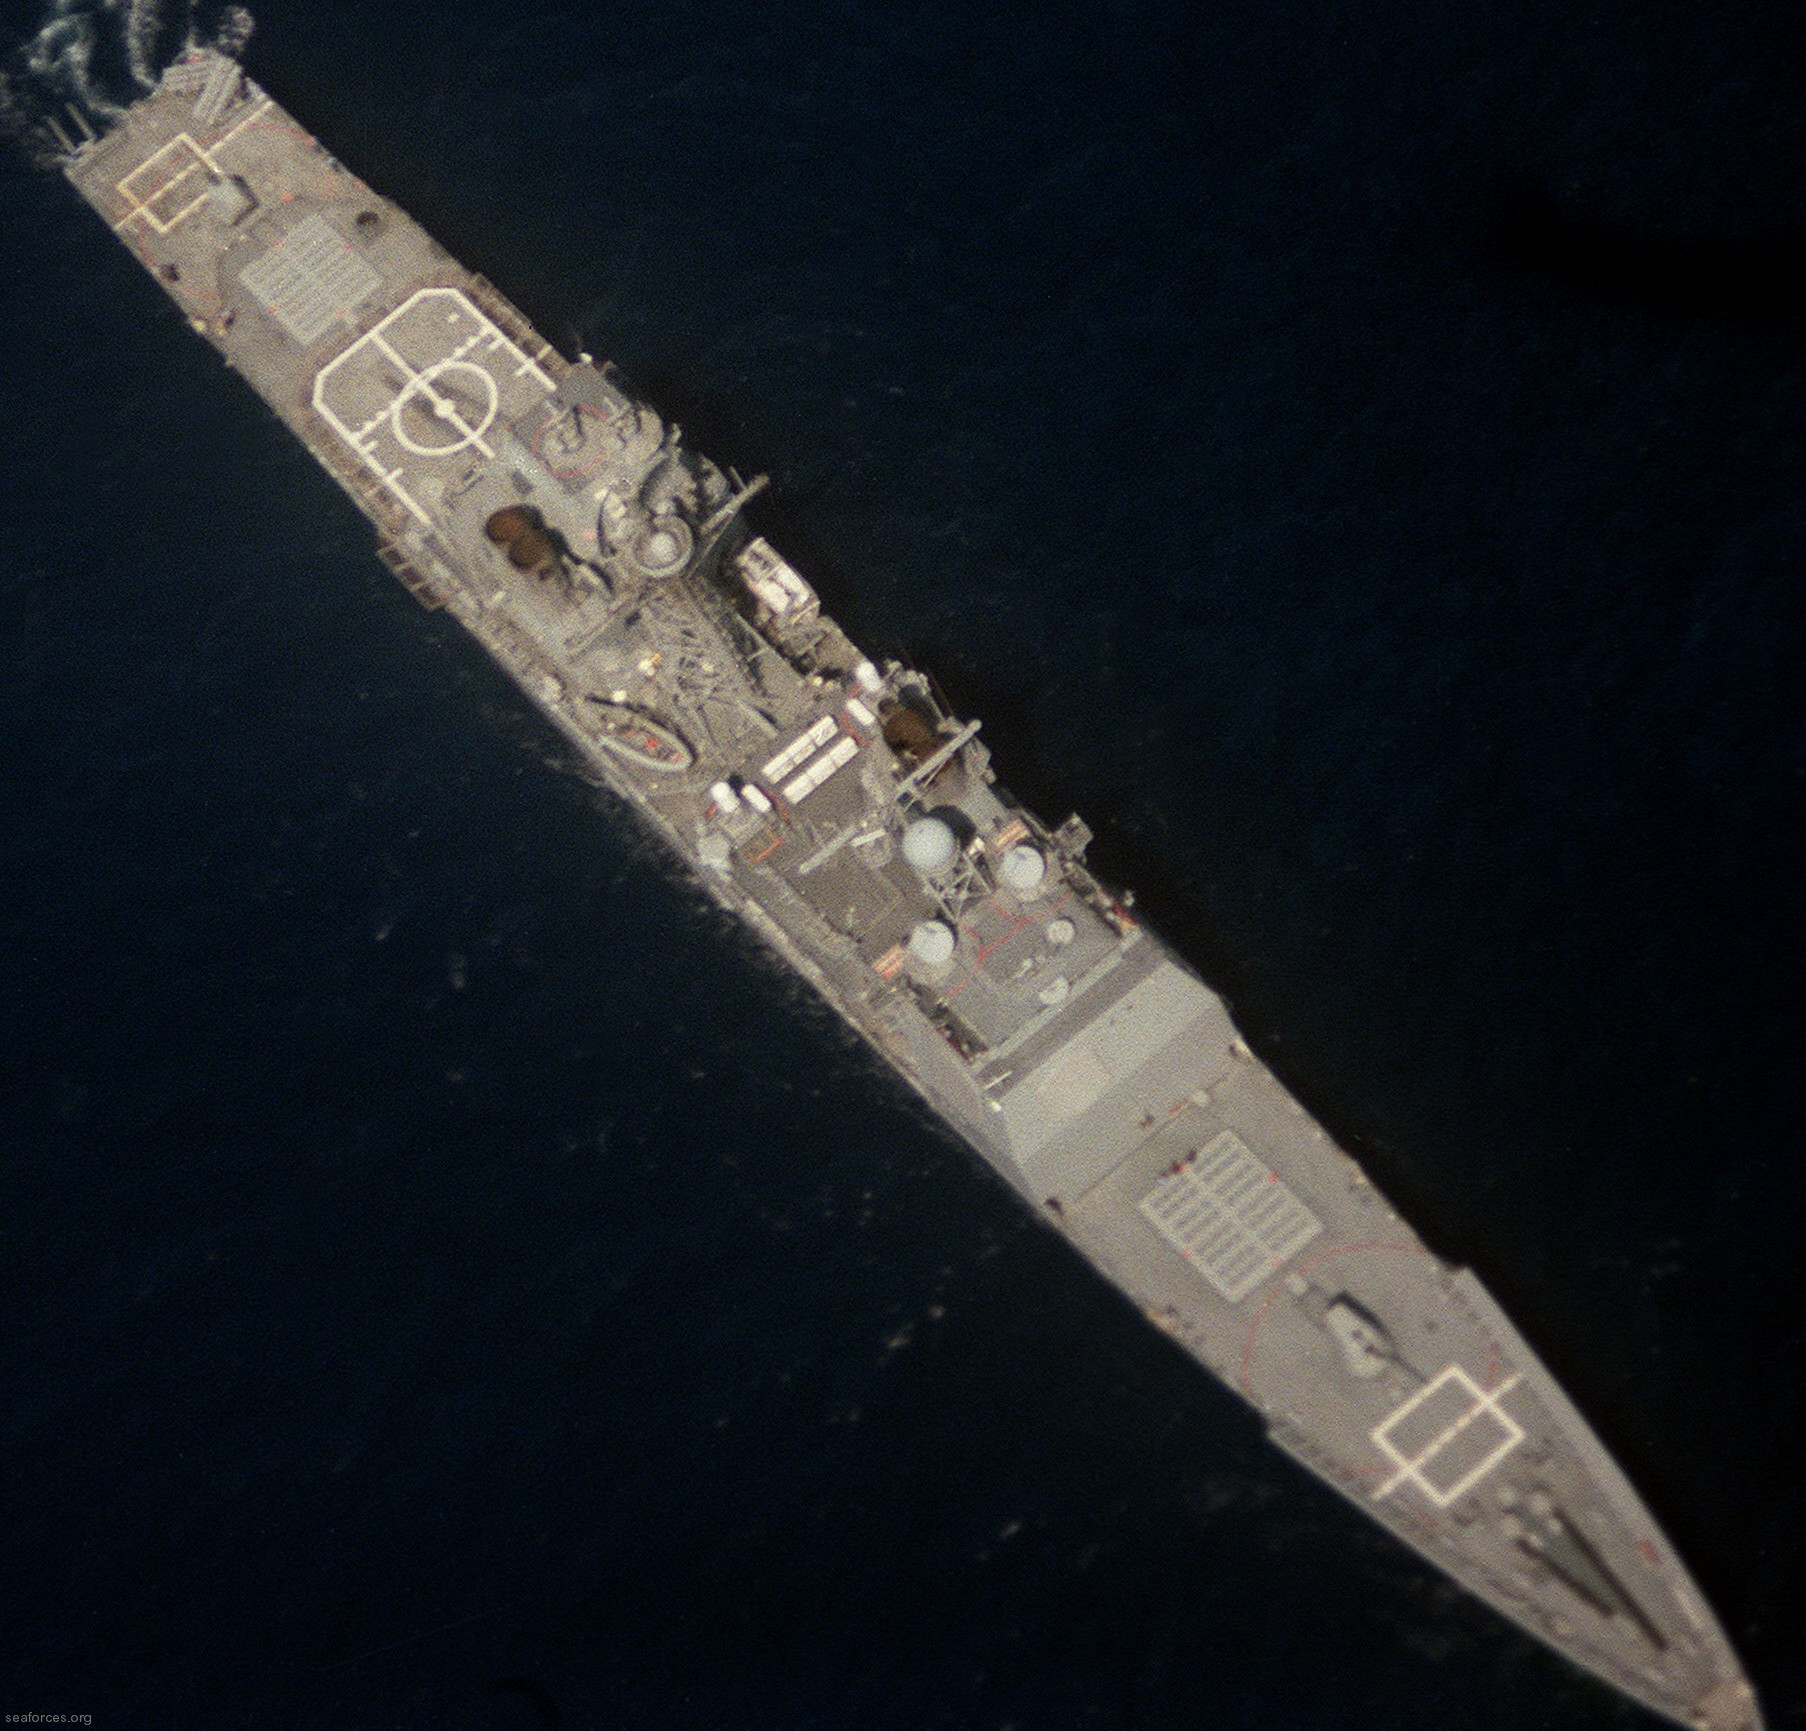 cg-69 uss vicksburg ticonderoga class guided missile cruiser us navy 62